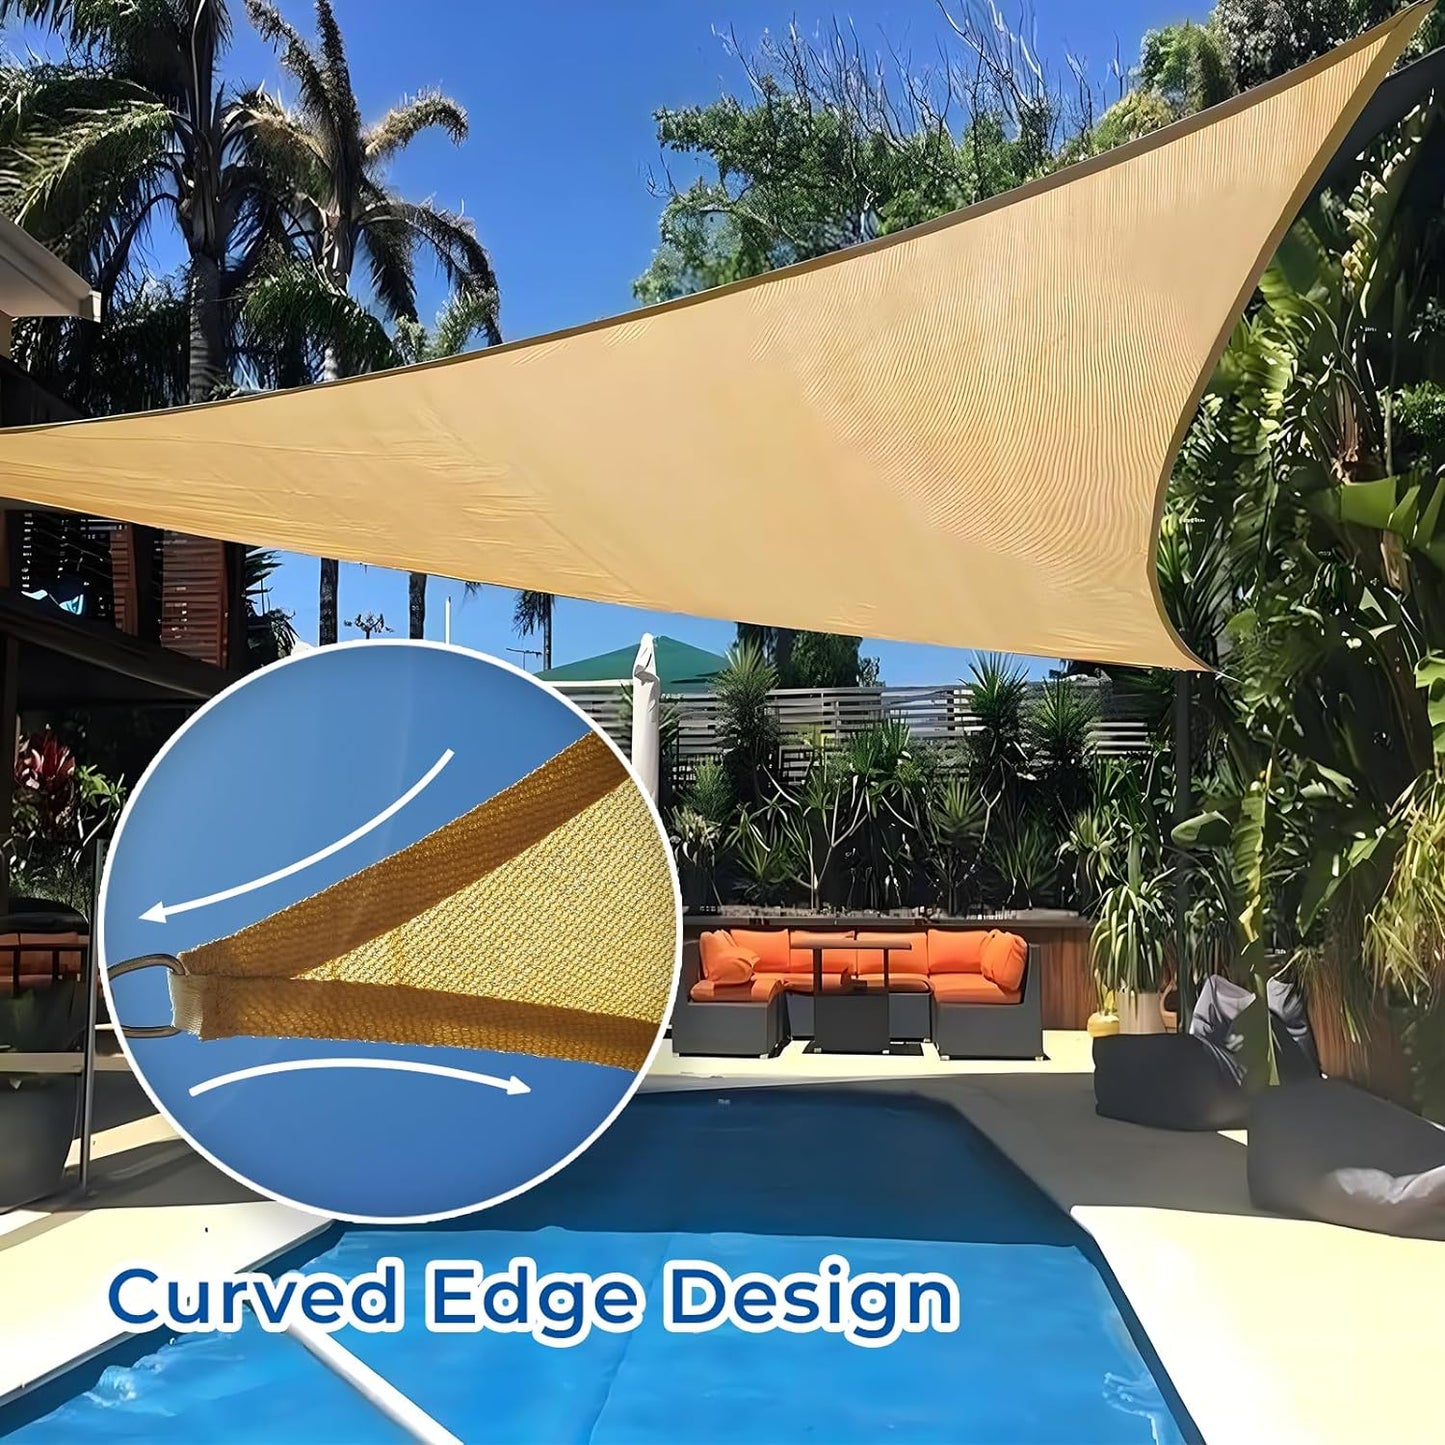 Triangle Sun Shade Sail Canopy for Patio Pool Deck Outdoor Backyard